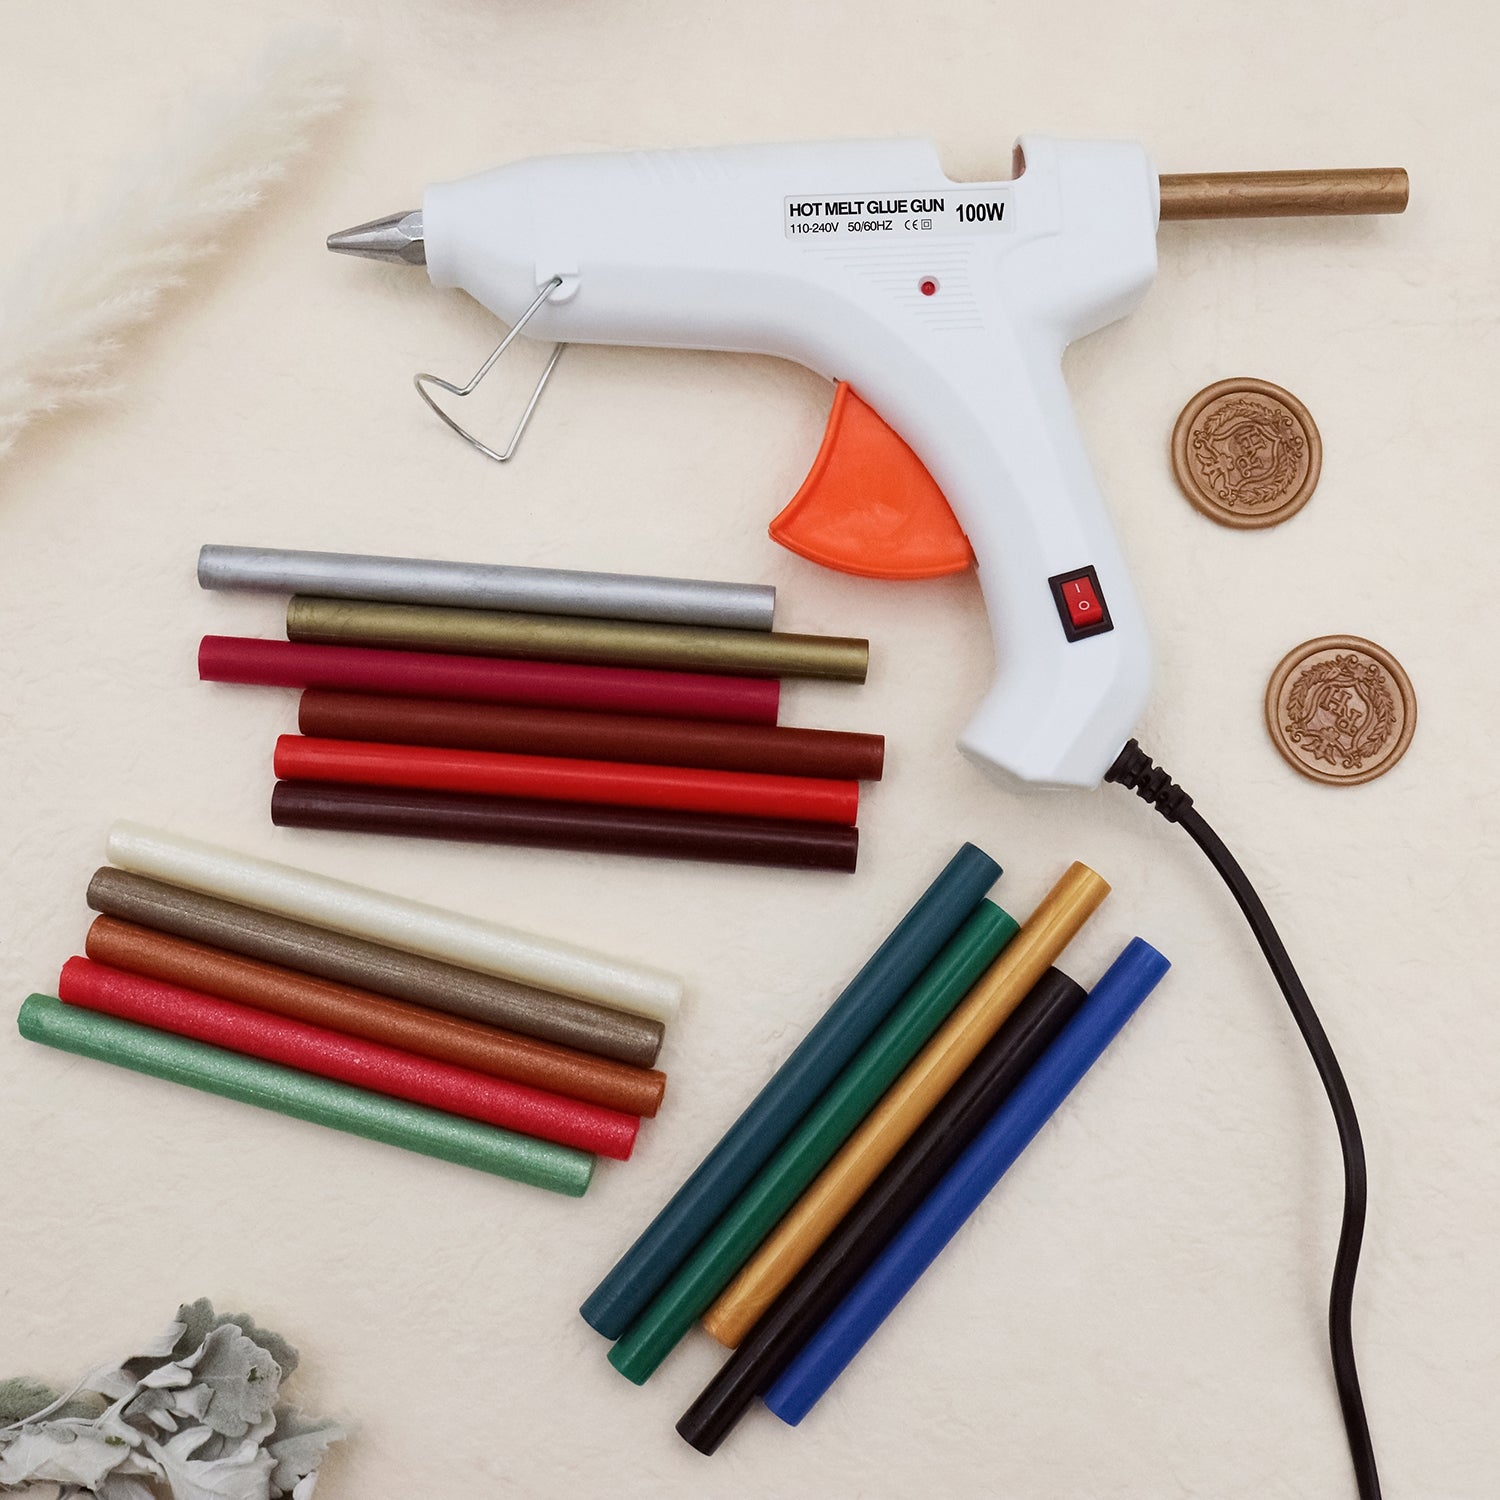 Hoppler set of (20) 7mm Sealing Wax Sticks For Glue Guns, Use With